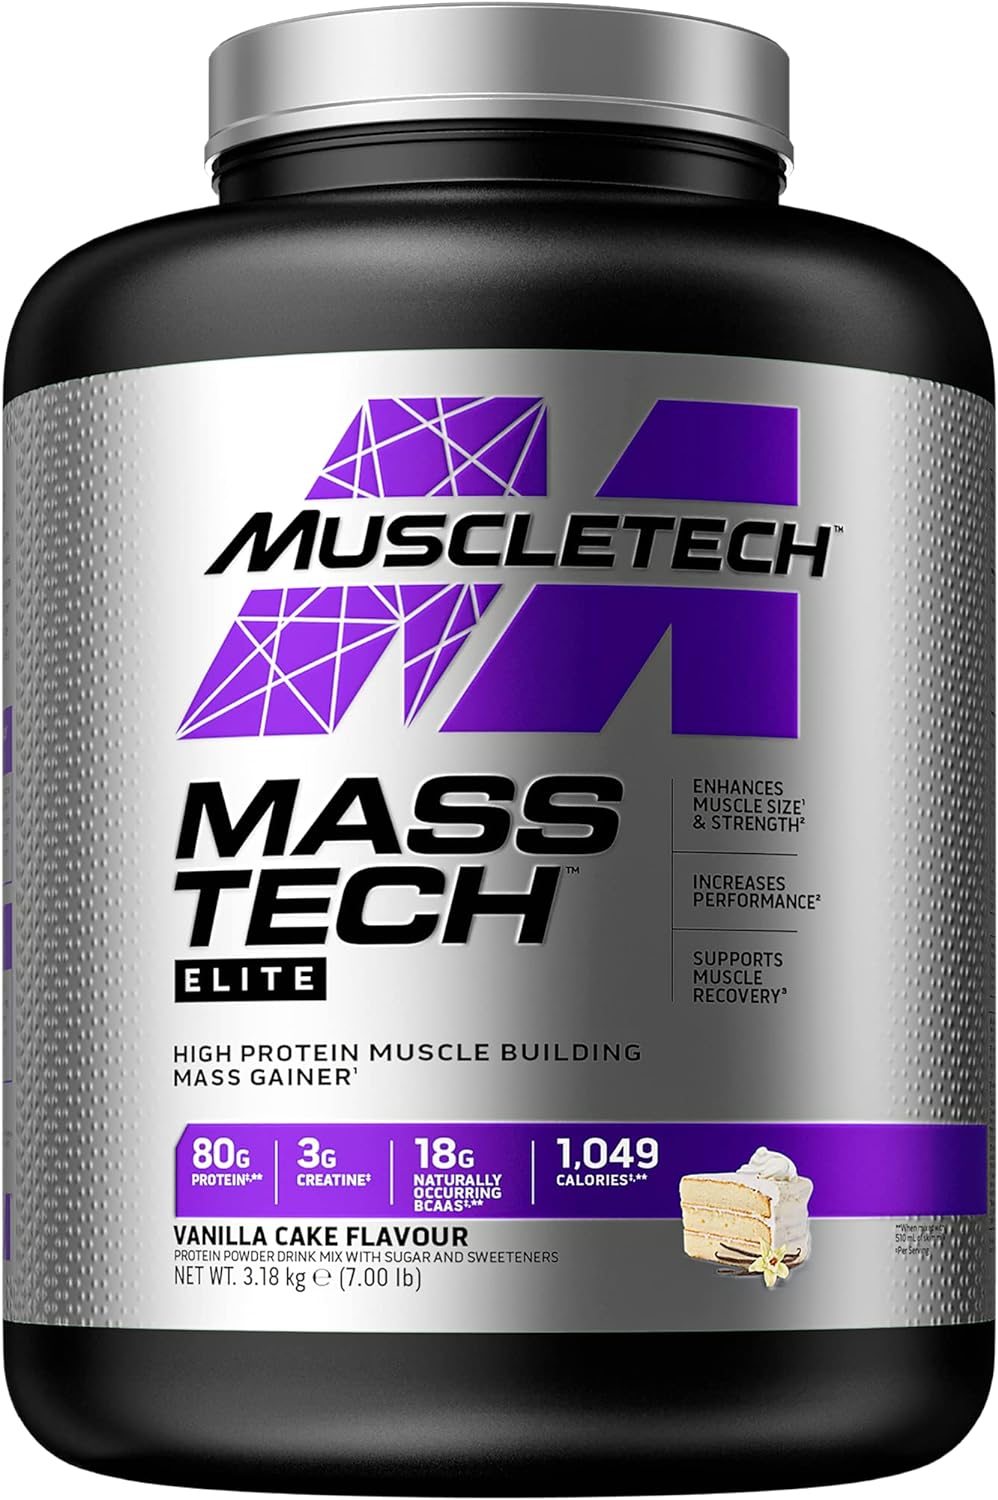 پودر گینر مس ماسل تک اورجینال مدل Muscletech Mass Tech Vanilla - ارسال 10 الی 15 روز کاری